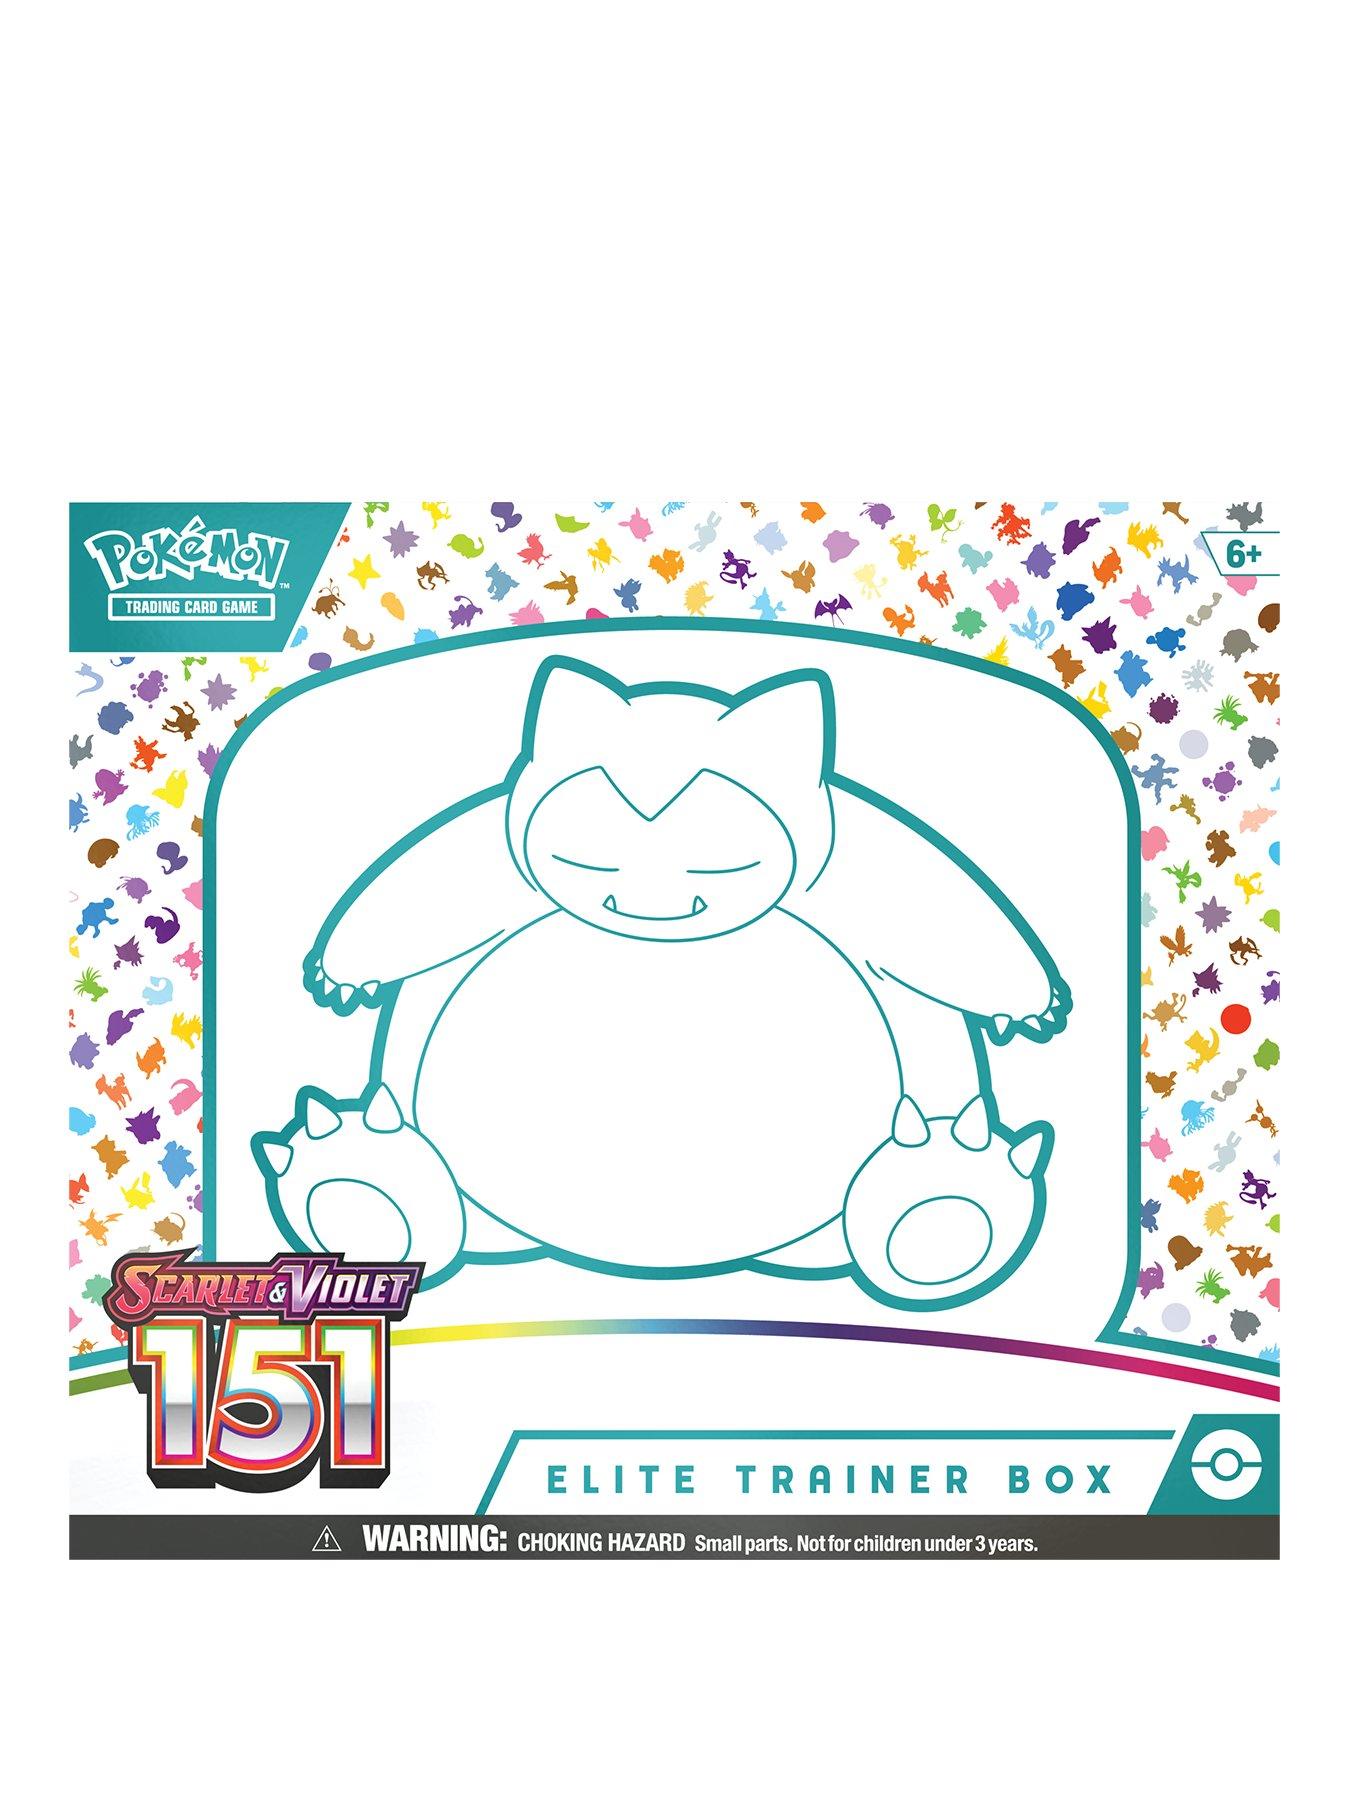 Pokemon Trading Card Game promo 325/S-P Lugia VSTAR (Rank A)